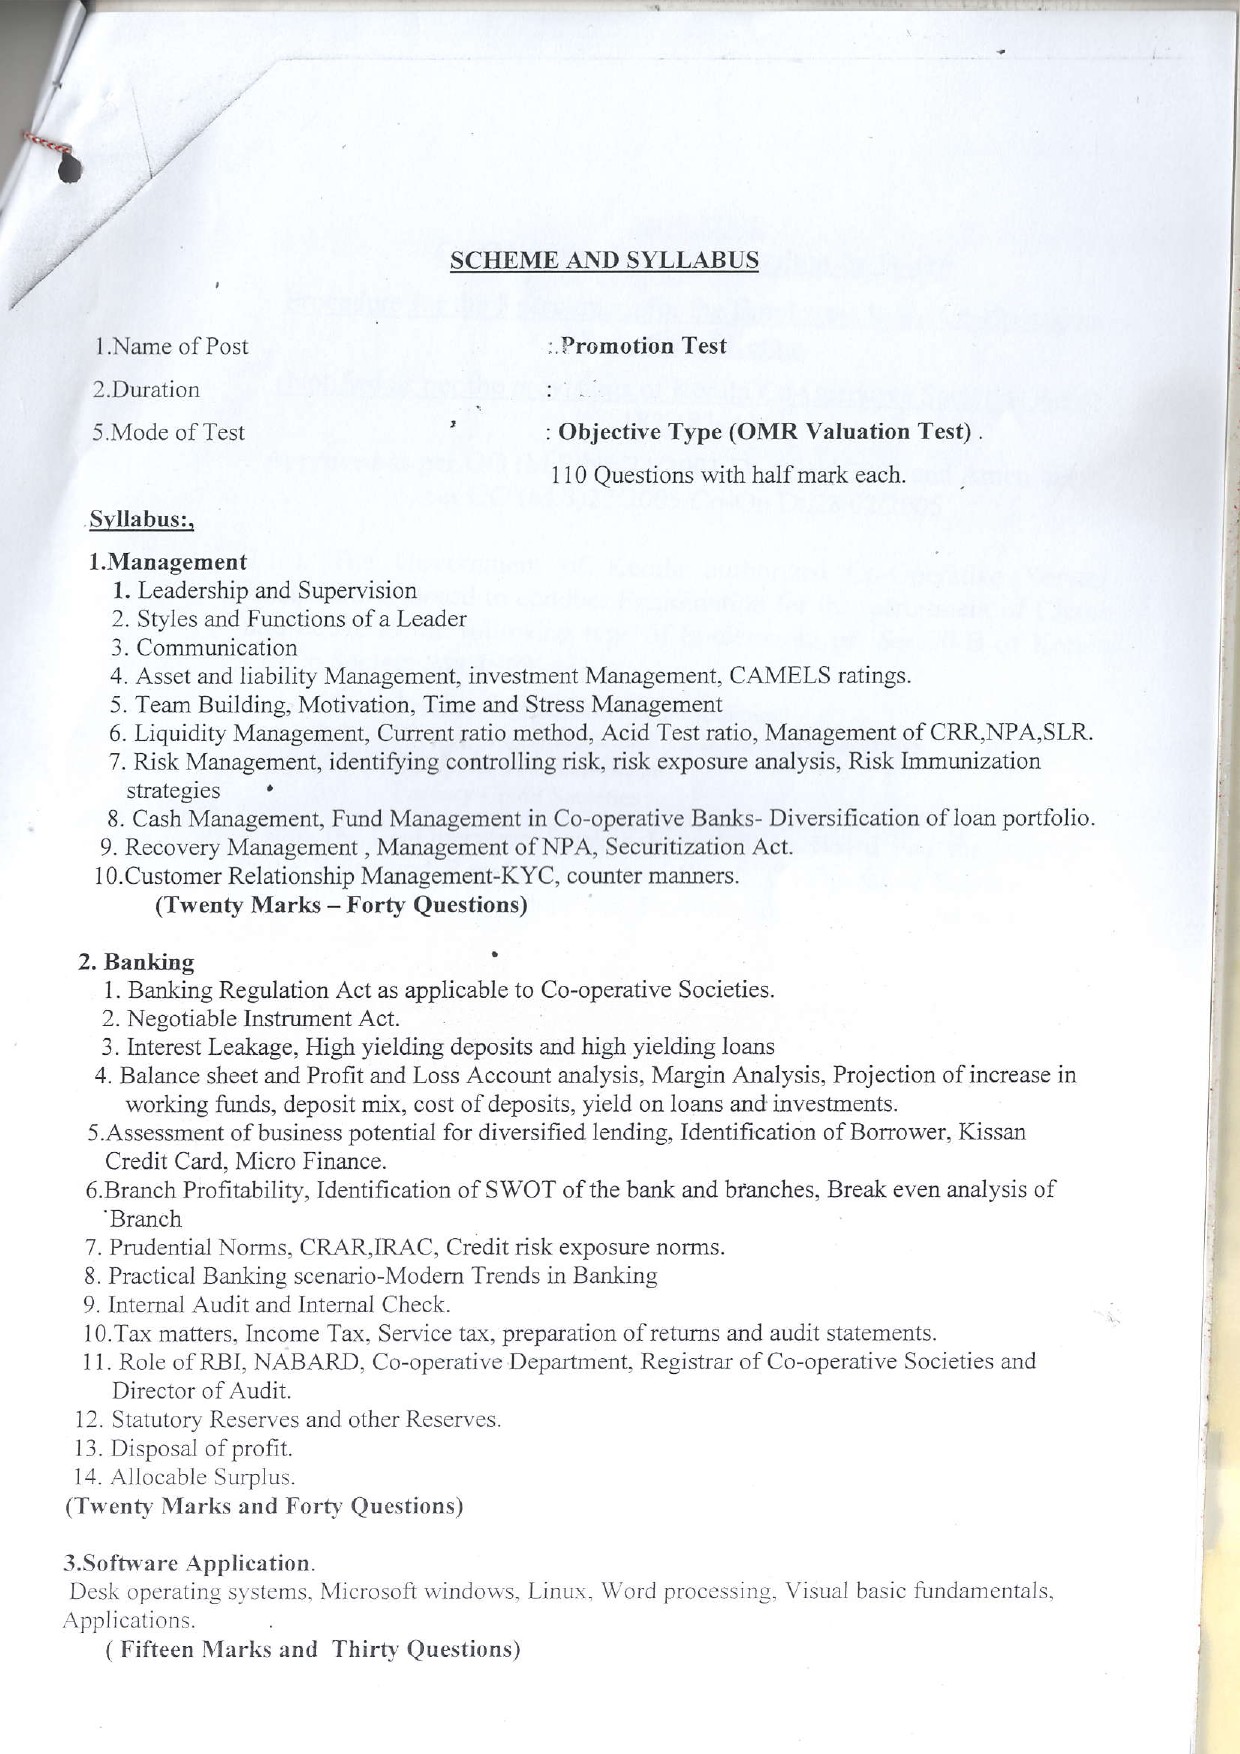 kerala-co-operative-services-examination-board-cseb-data-promotion-test-syllabus-2021-exam-and